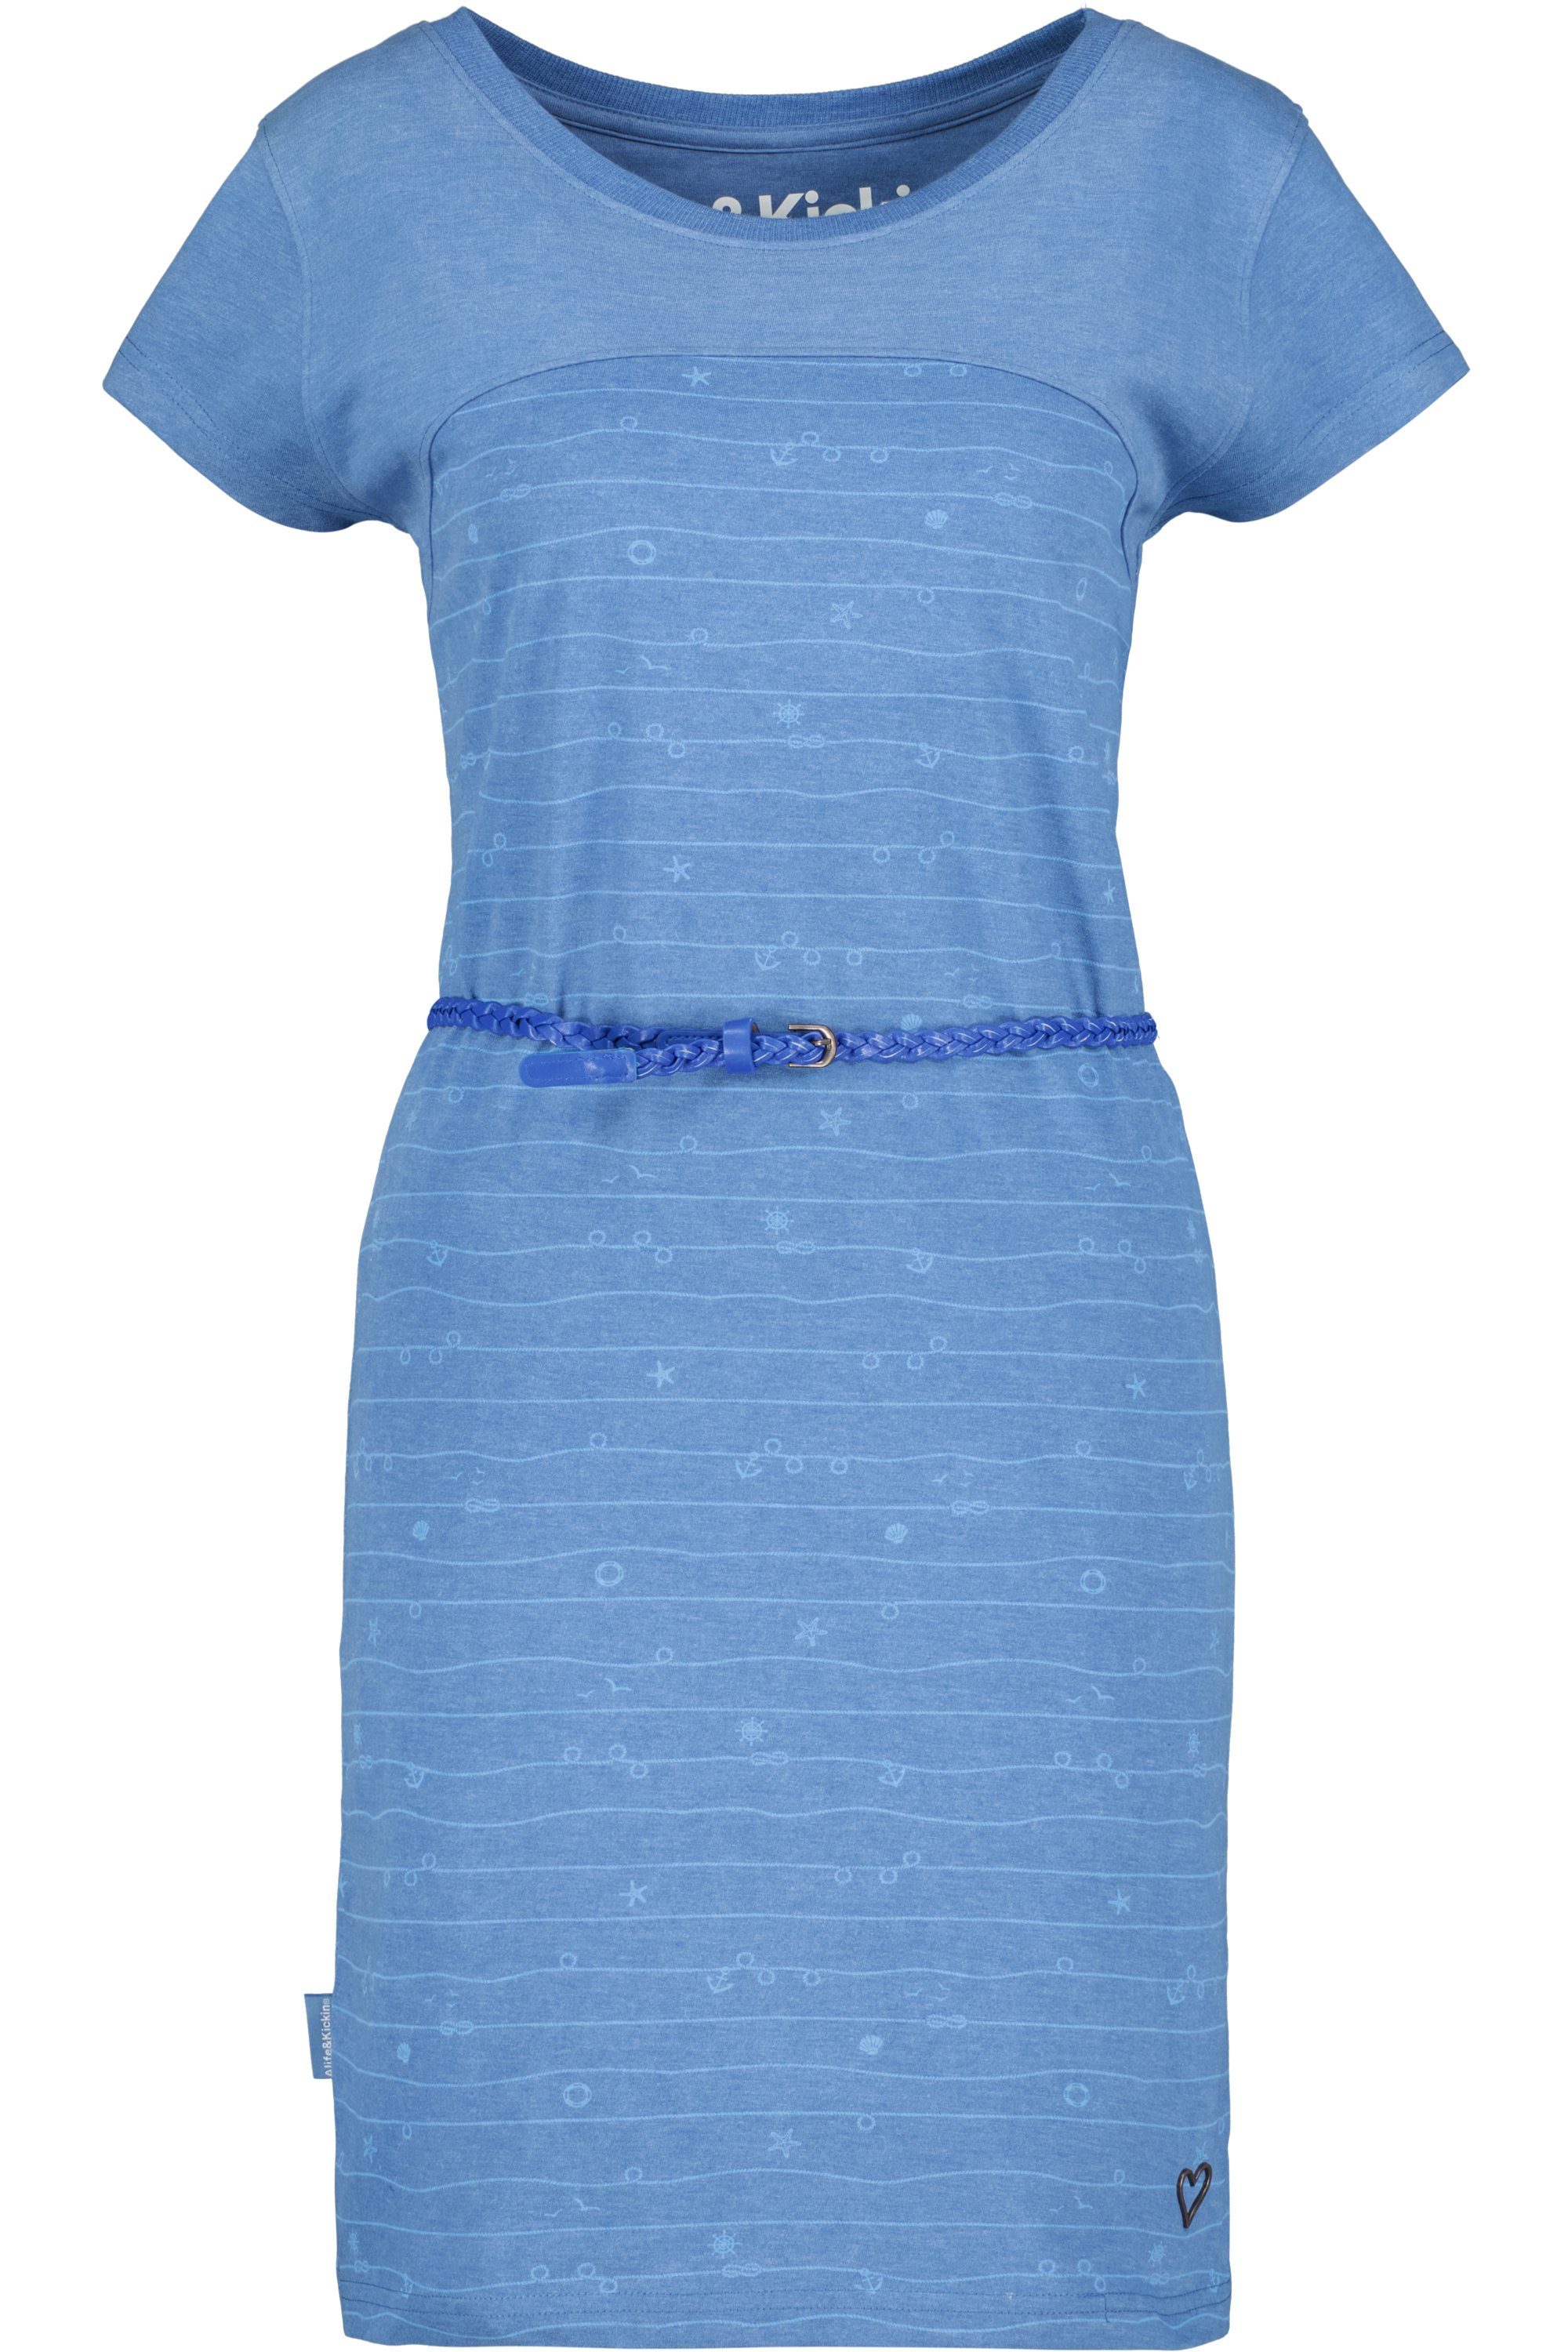 Alife & Kickin Kleid Sommerkleid, ClariceAK cobalt Damen Blusenkleid Dress